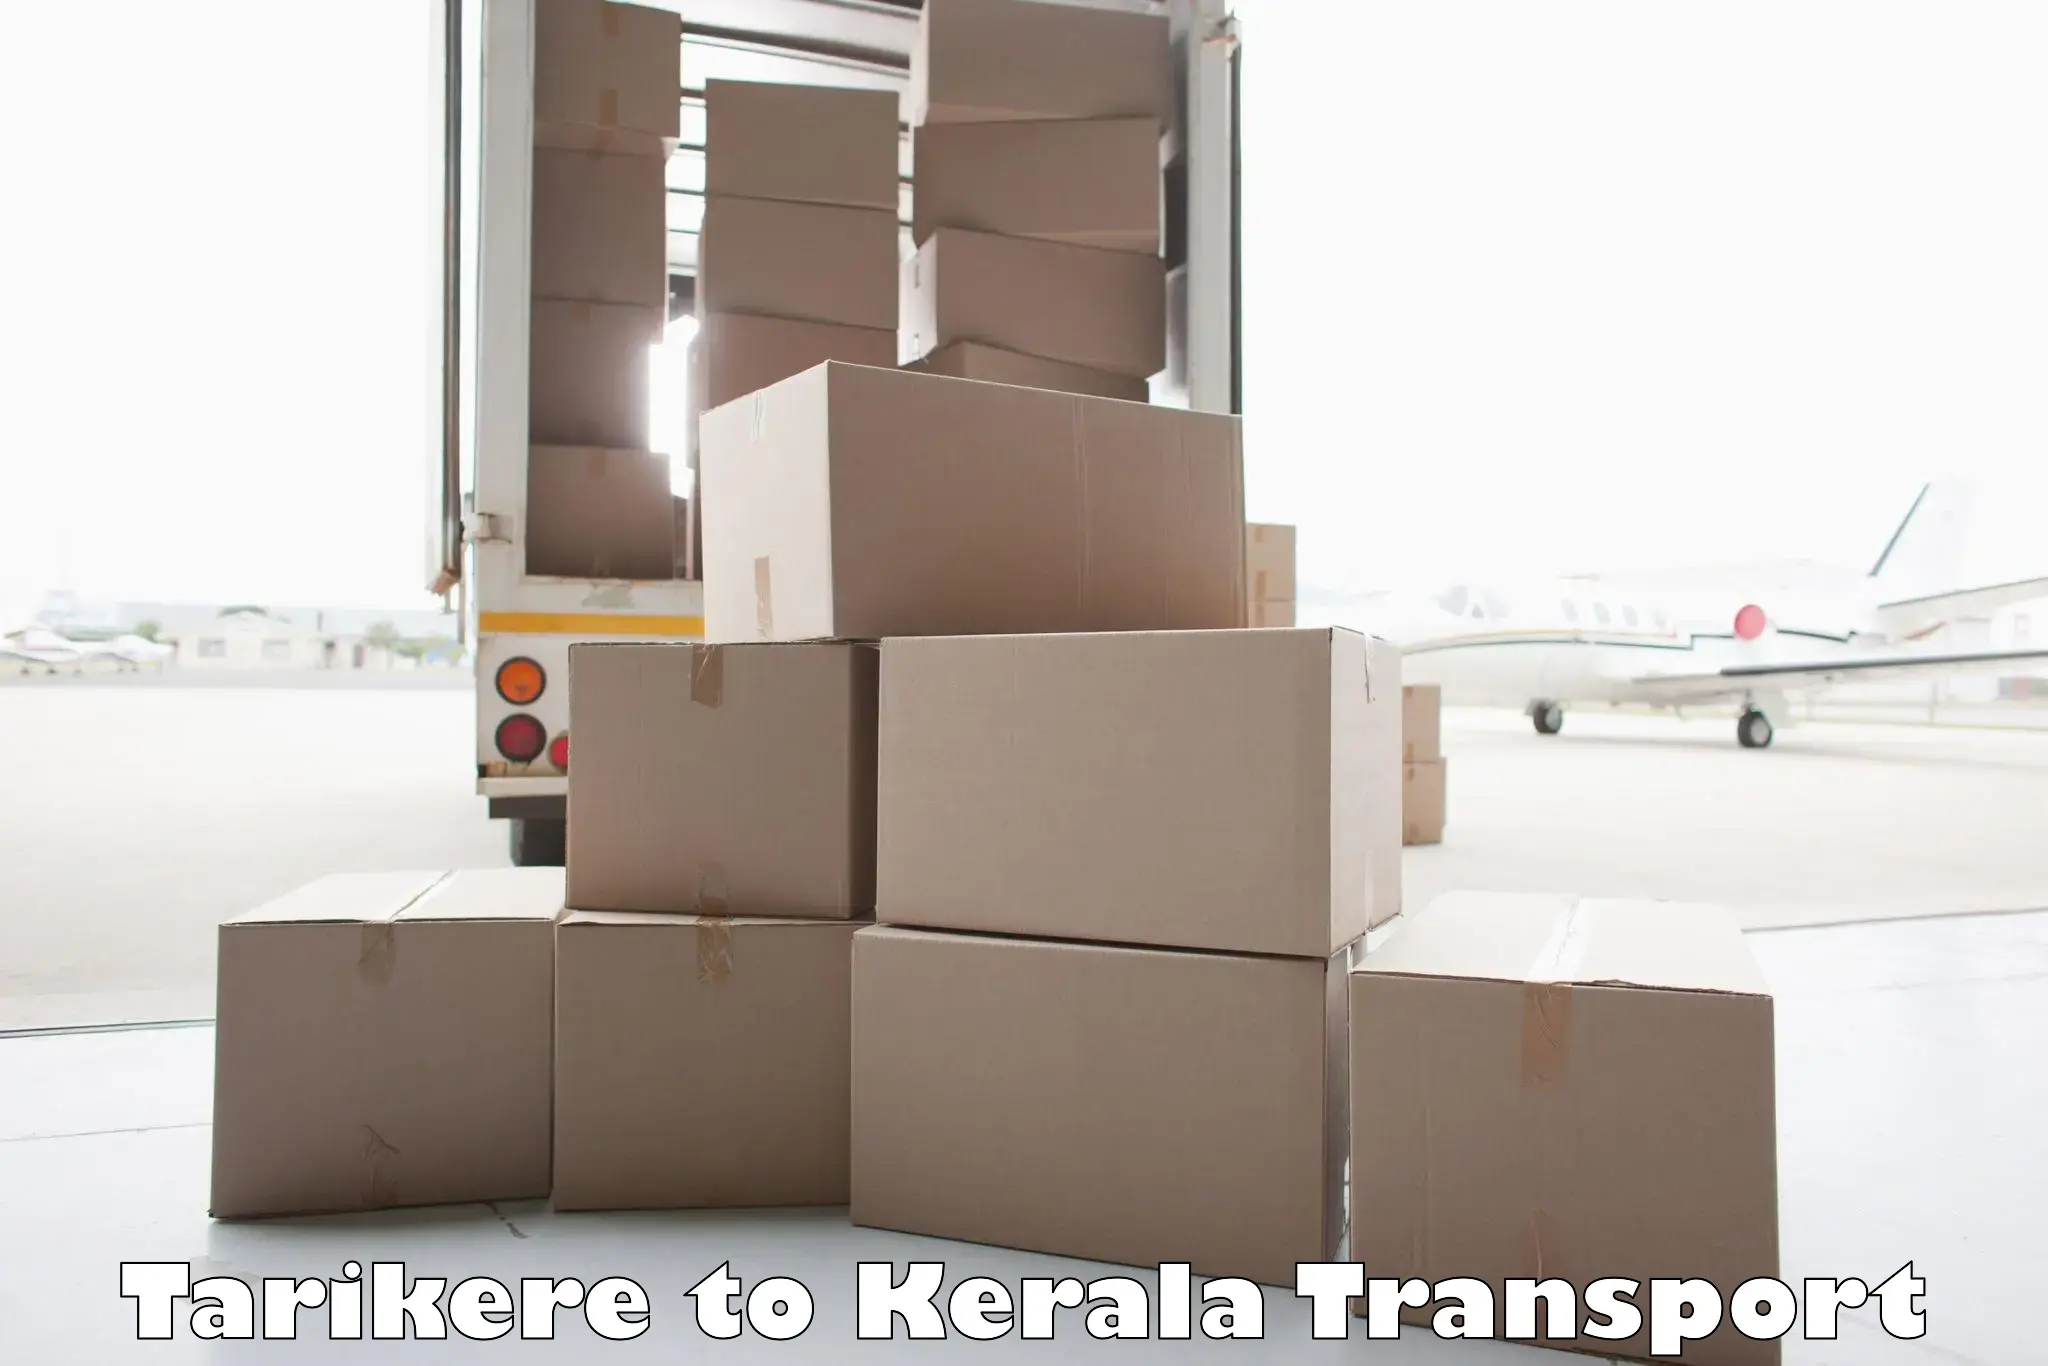 Shipping partner Tarikere to Cherthala